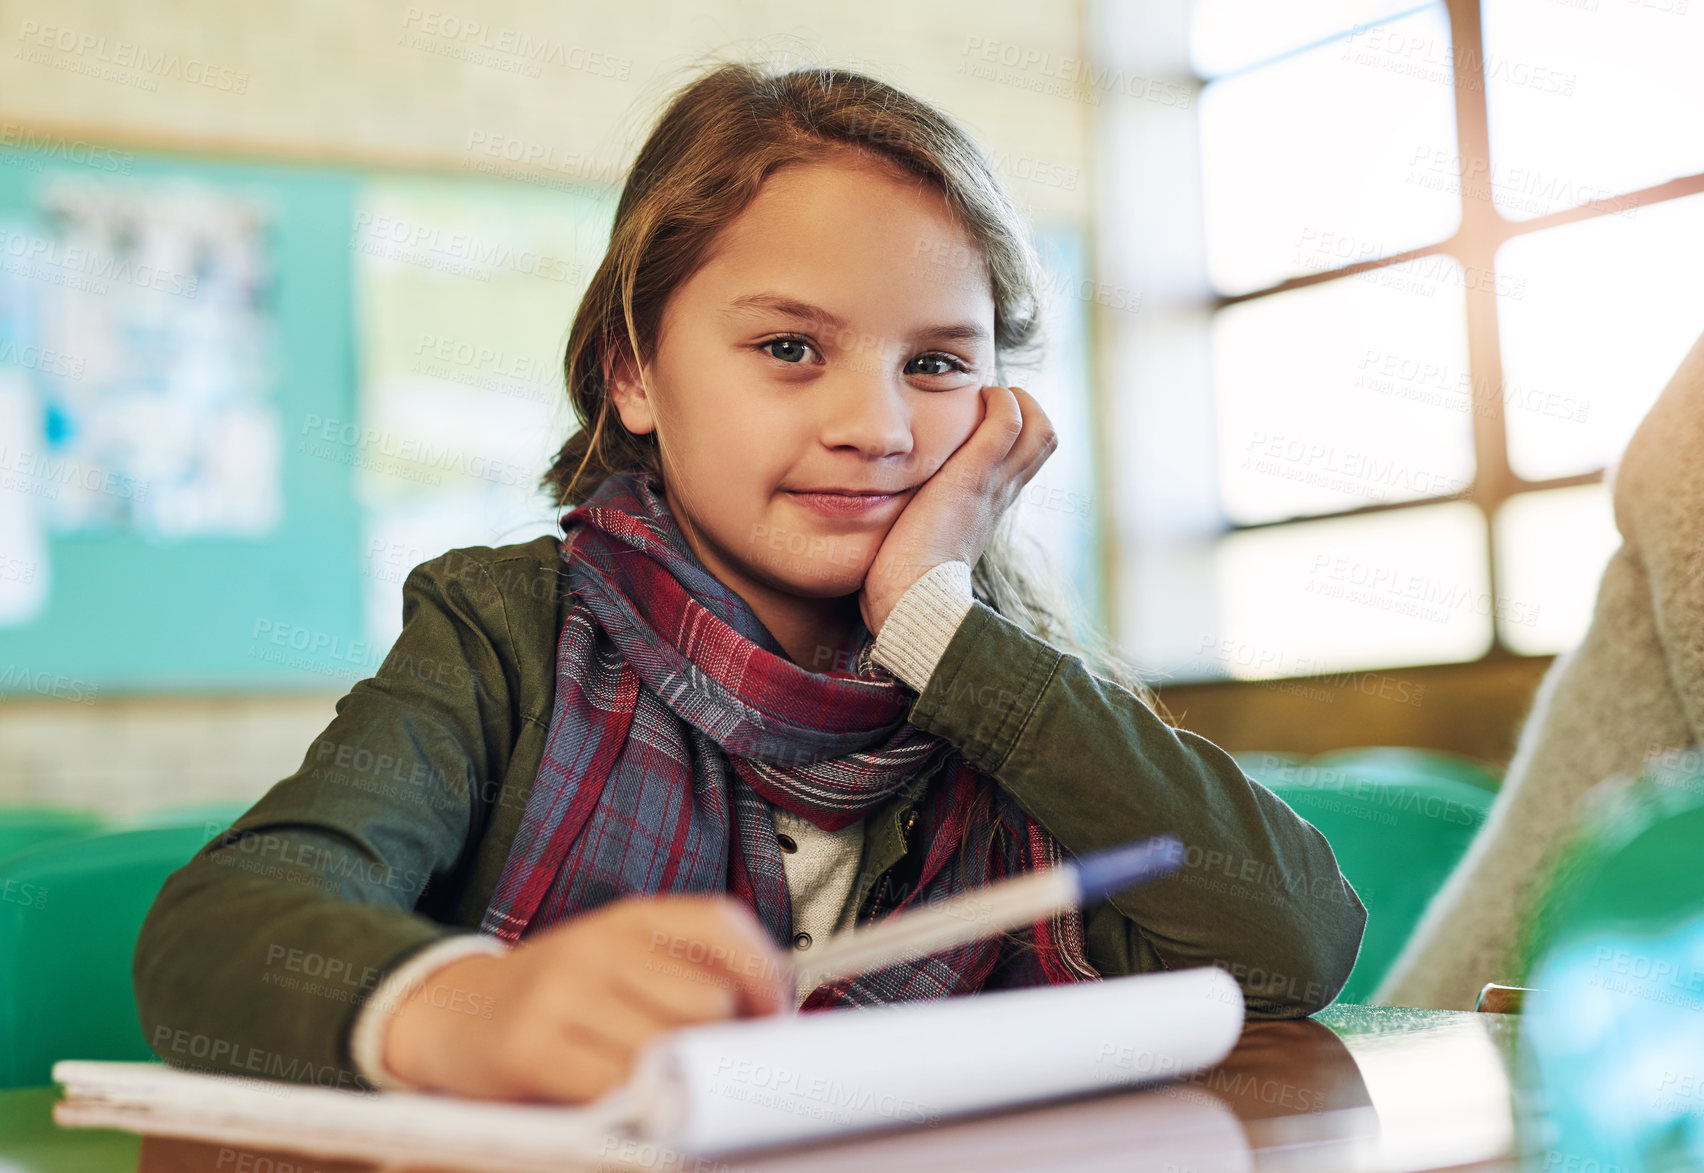 Buy stock photo Portrait of an adorable little girl doing her school work in class